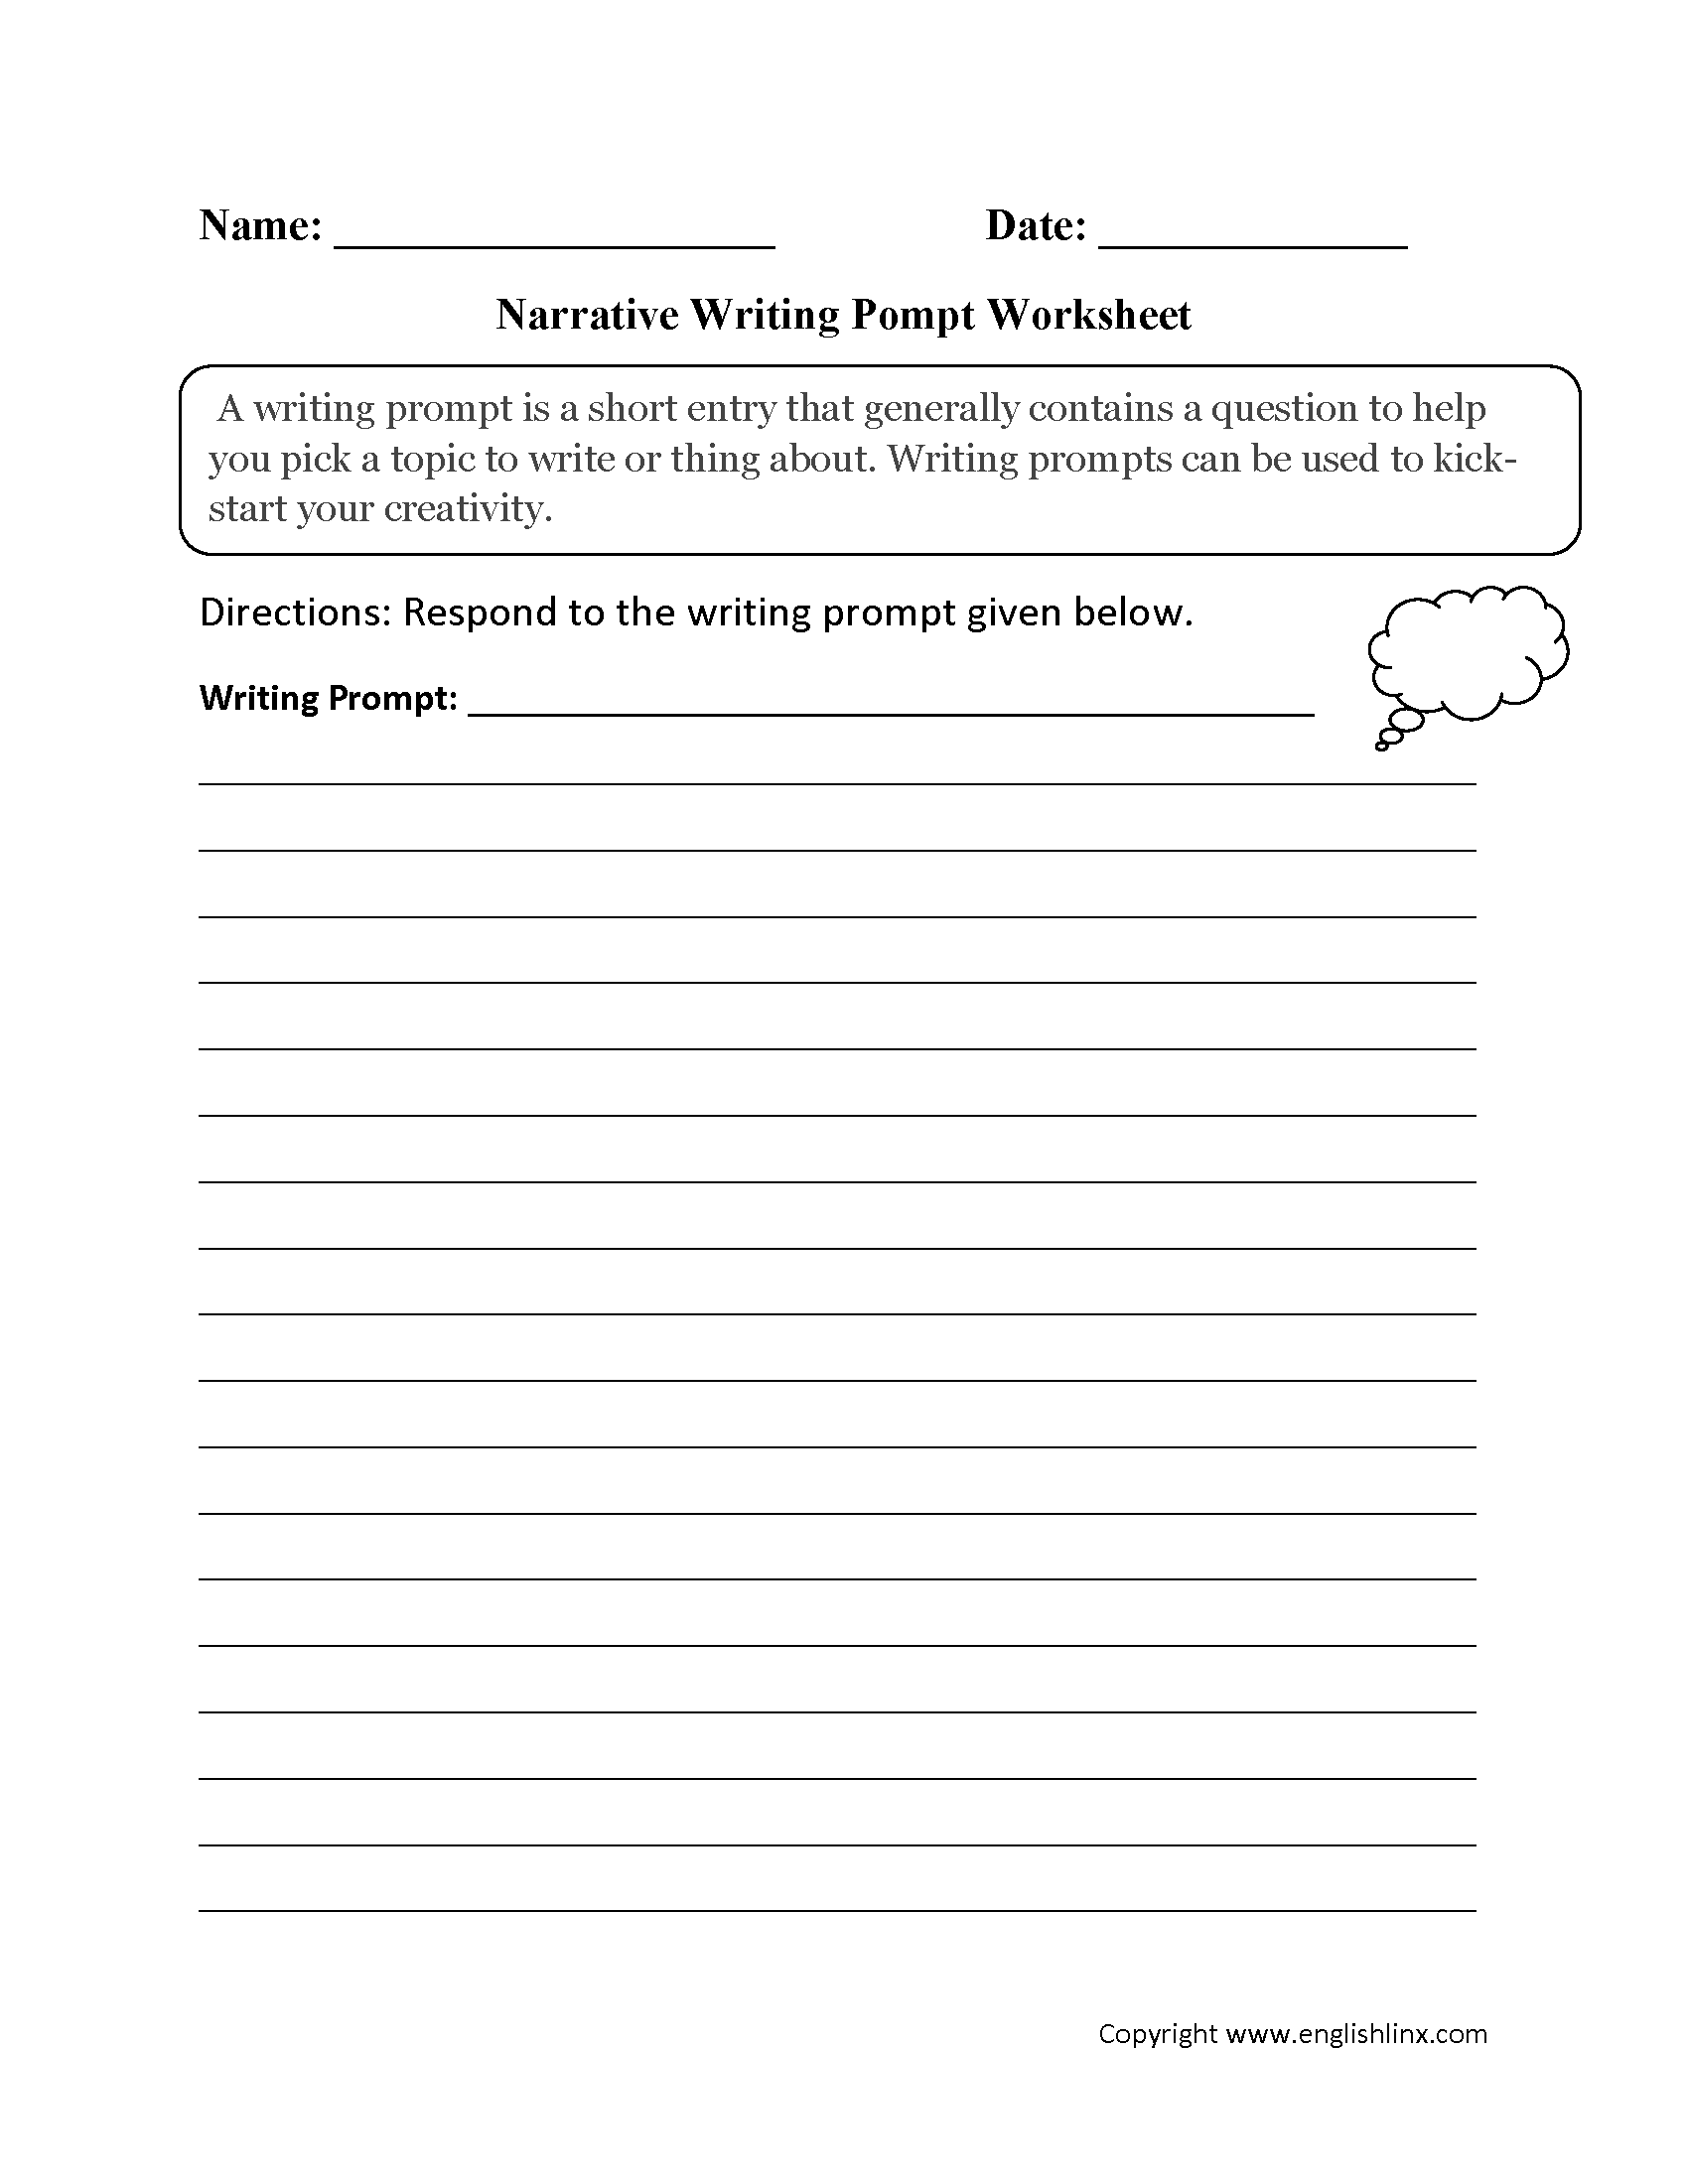 8th Grade Worksheets